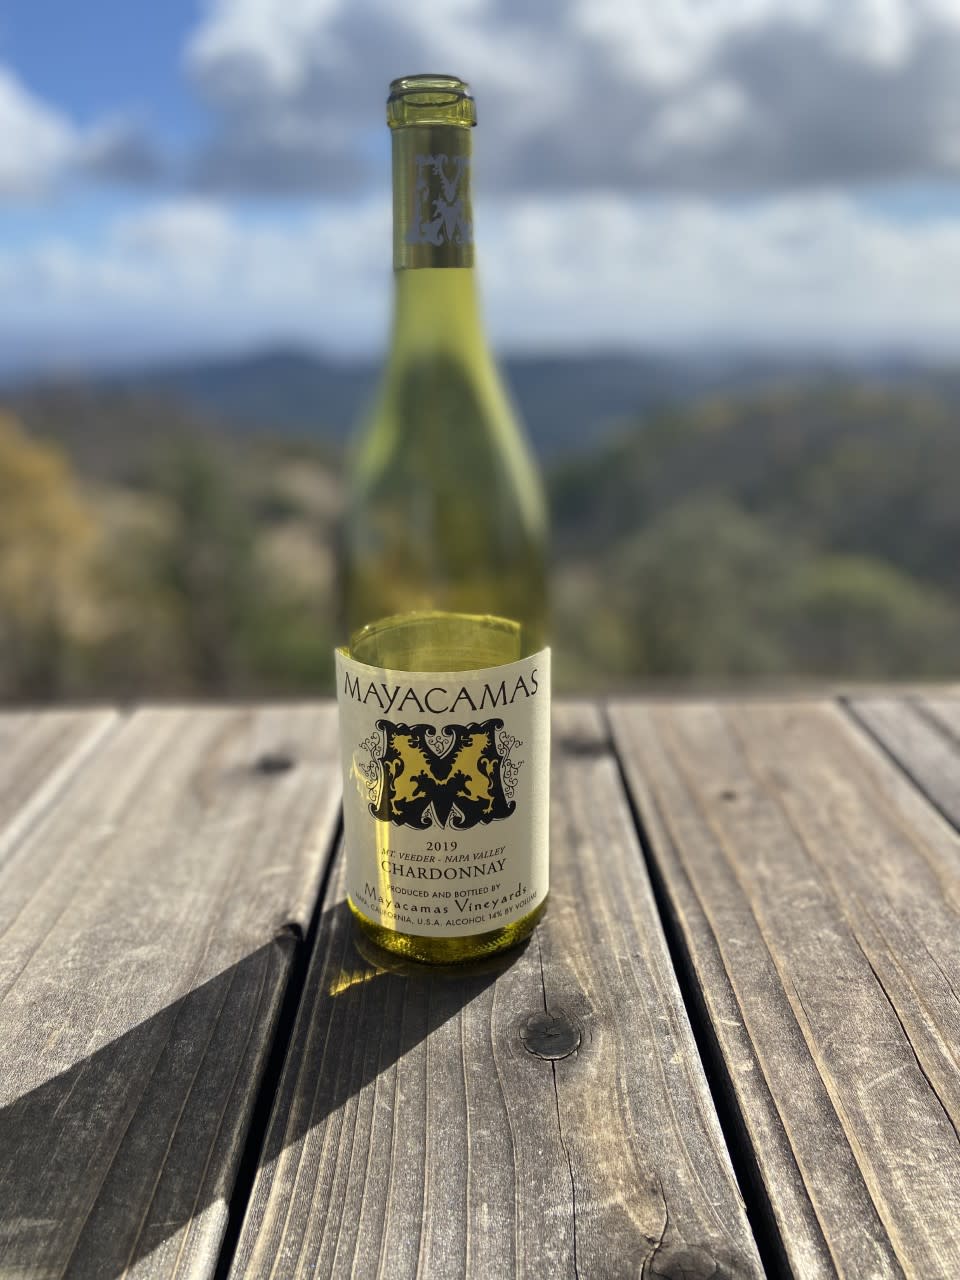 Chardonnay at Mayacamas Vineyards in Napa Valley, Calif. - Credit: Kellie Ell / WWD